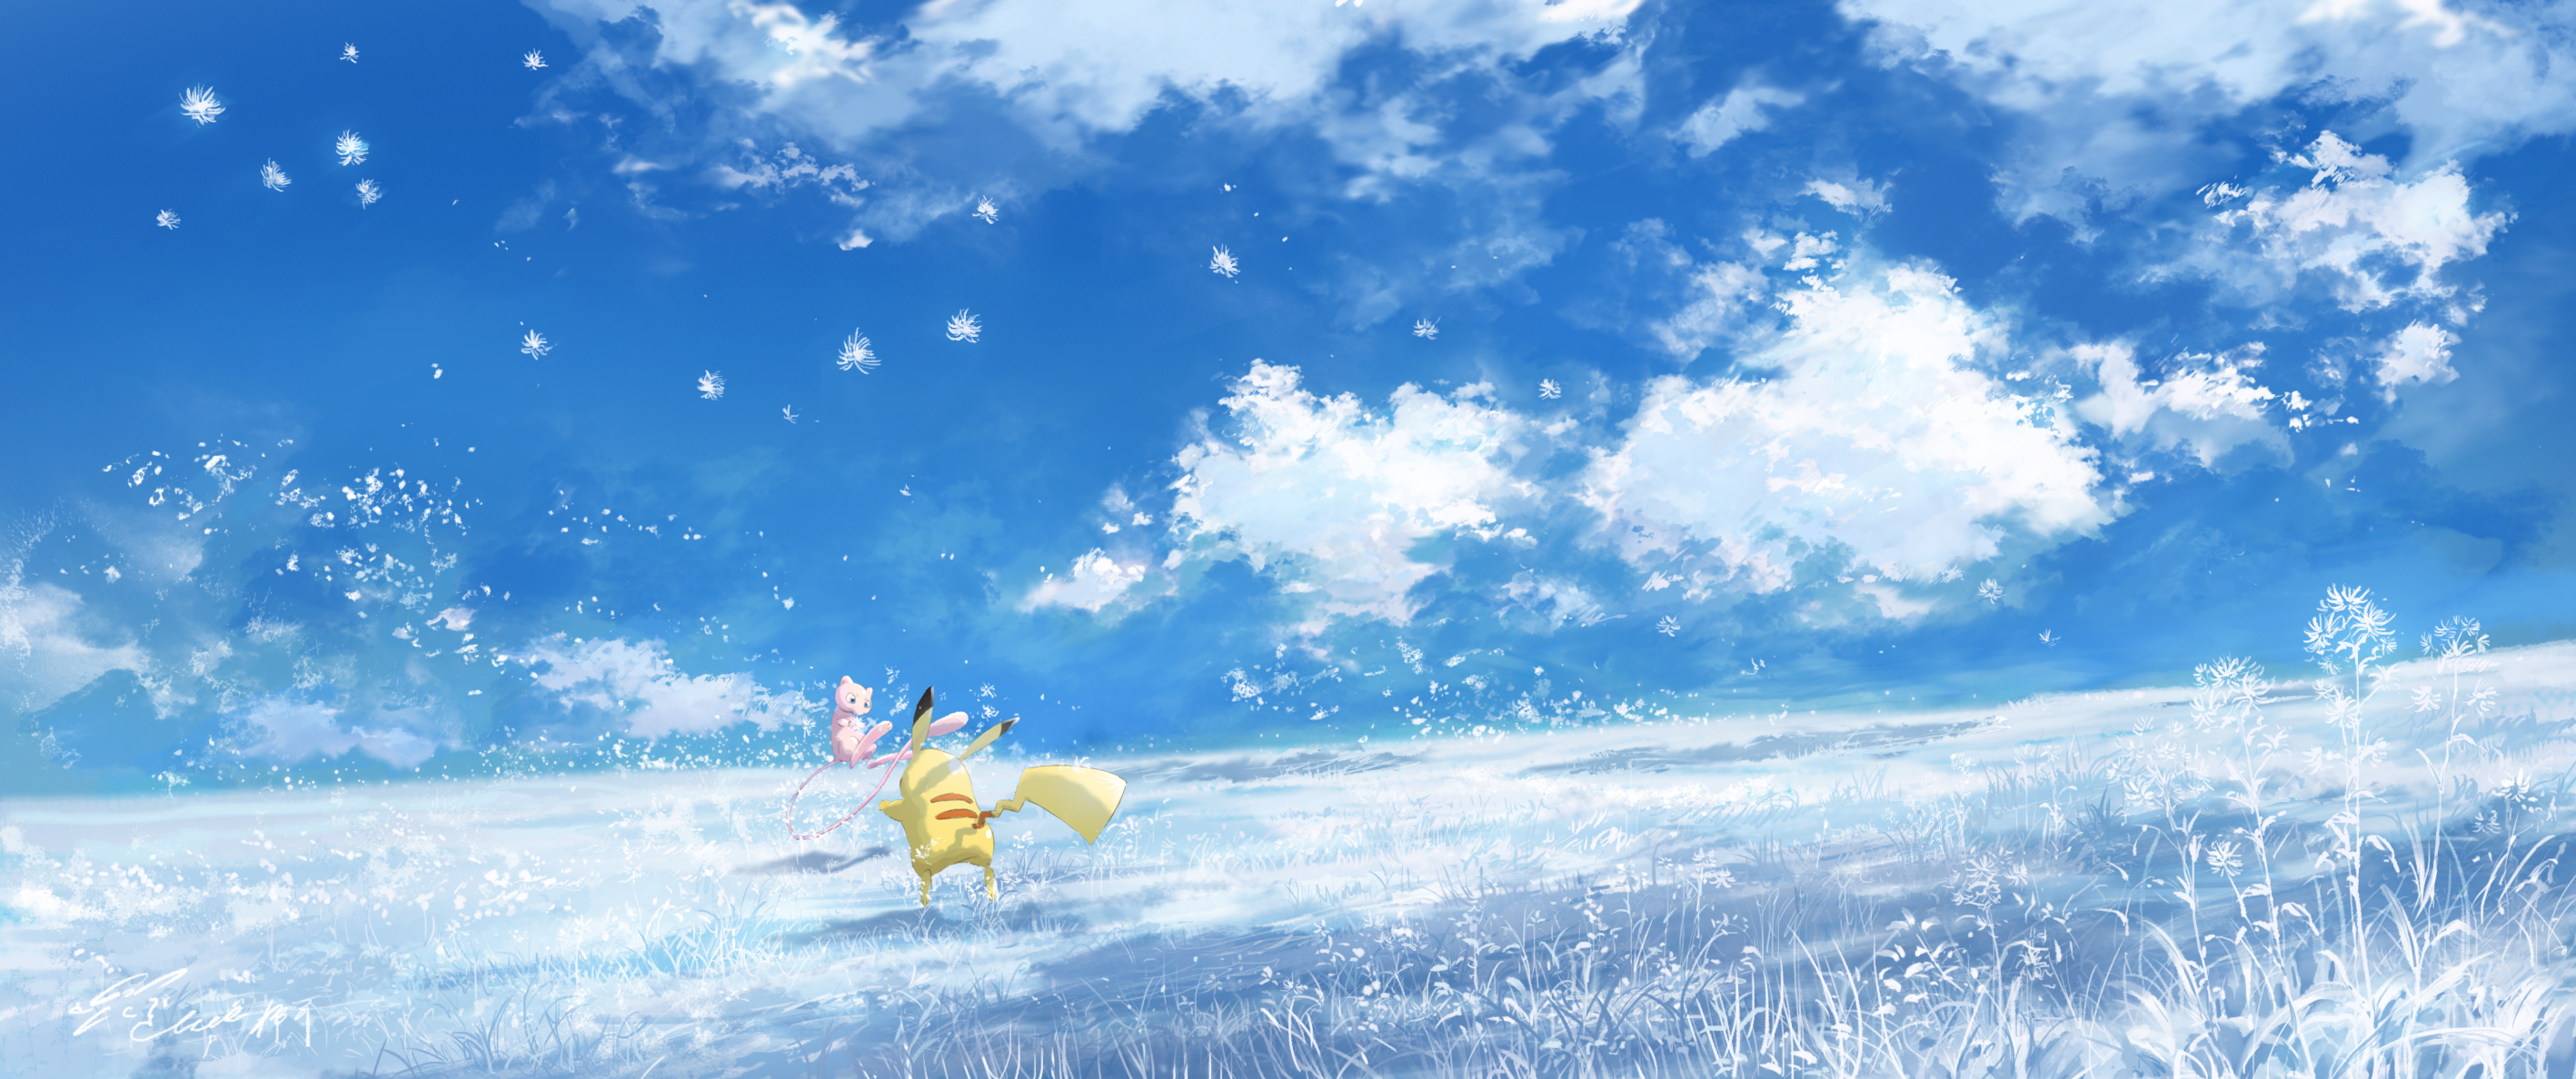 484915 descargar imagen animado, pokémon, mew (pokémon), pikachu, cielo: fondos de pantalla y protectores de pantalla gratis